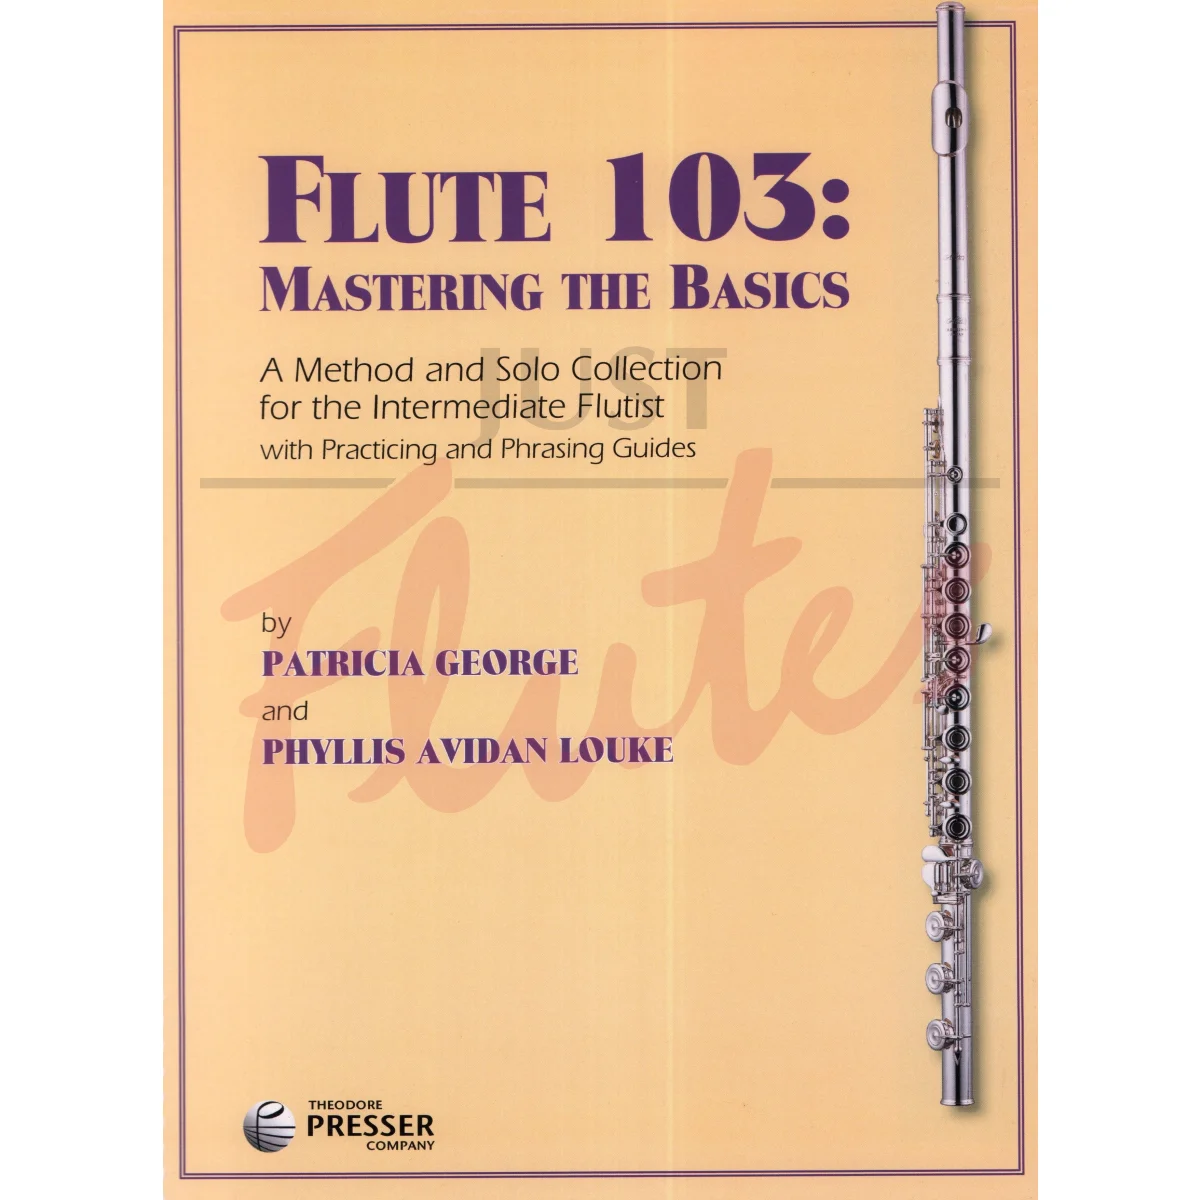 Flute 103: Mastering the Basics